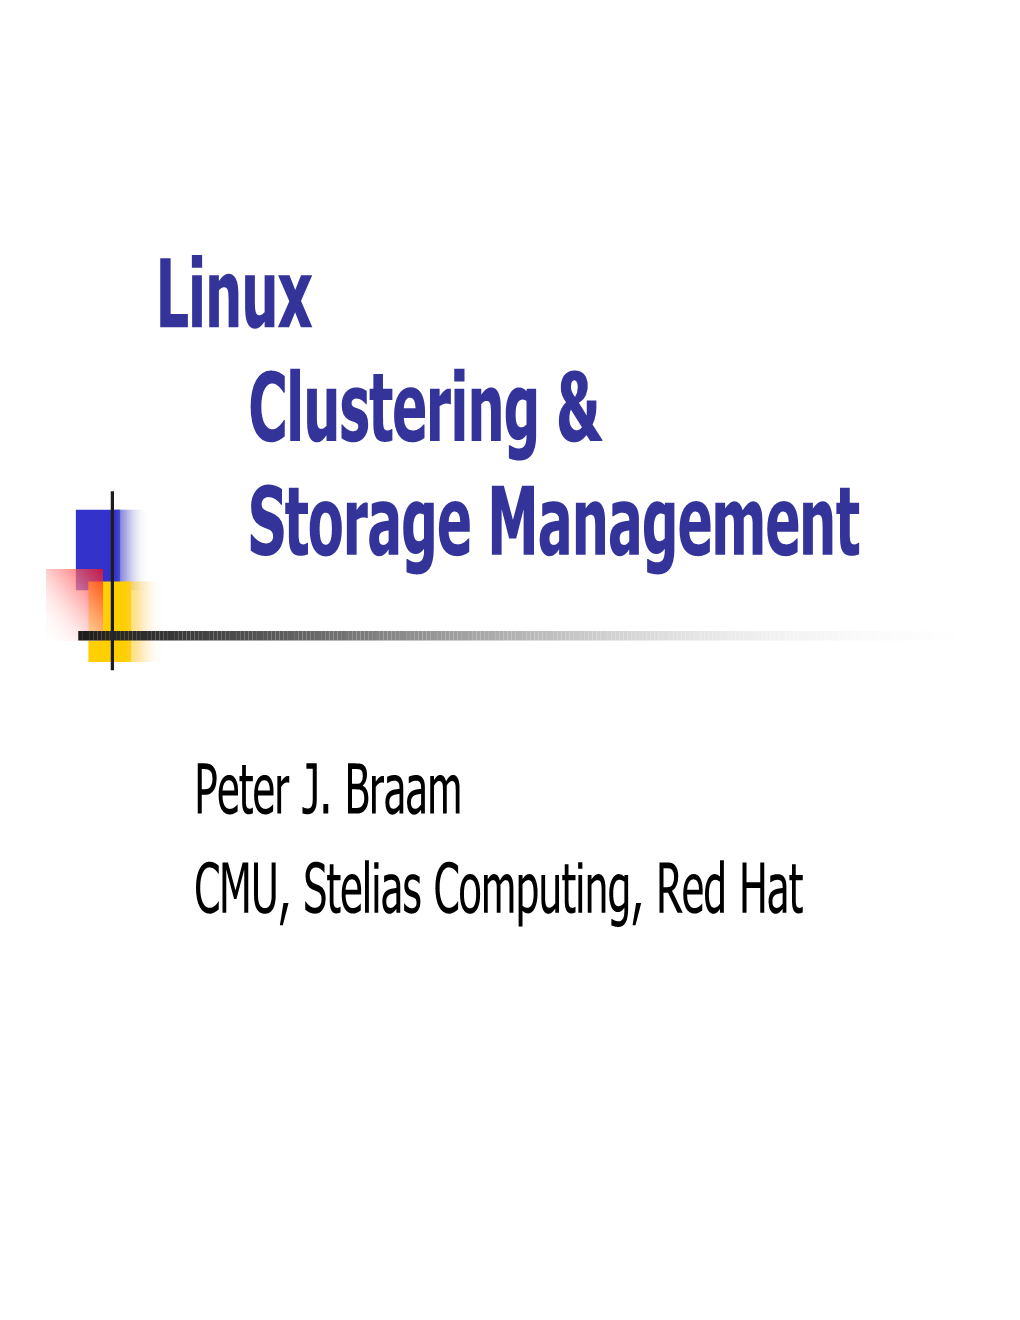 Linux Clustering & Storage Management